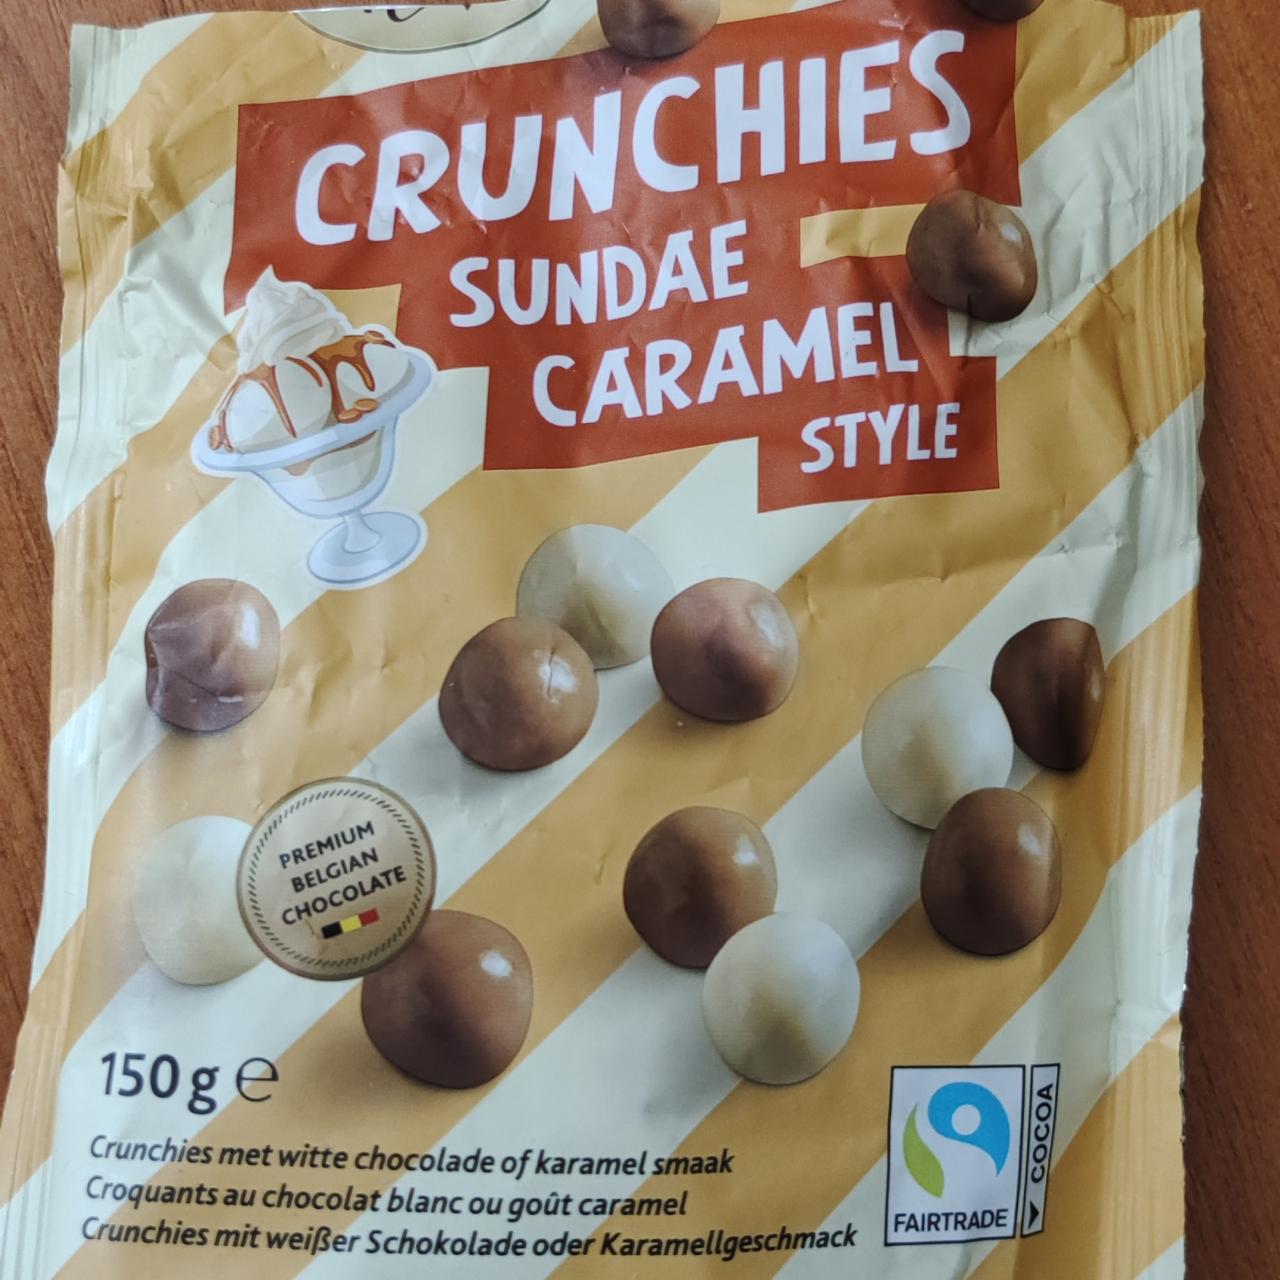 Zdjęcia - Crunchies sundae caramel style Choco Moment